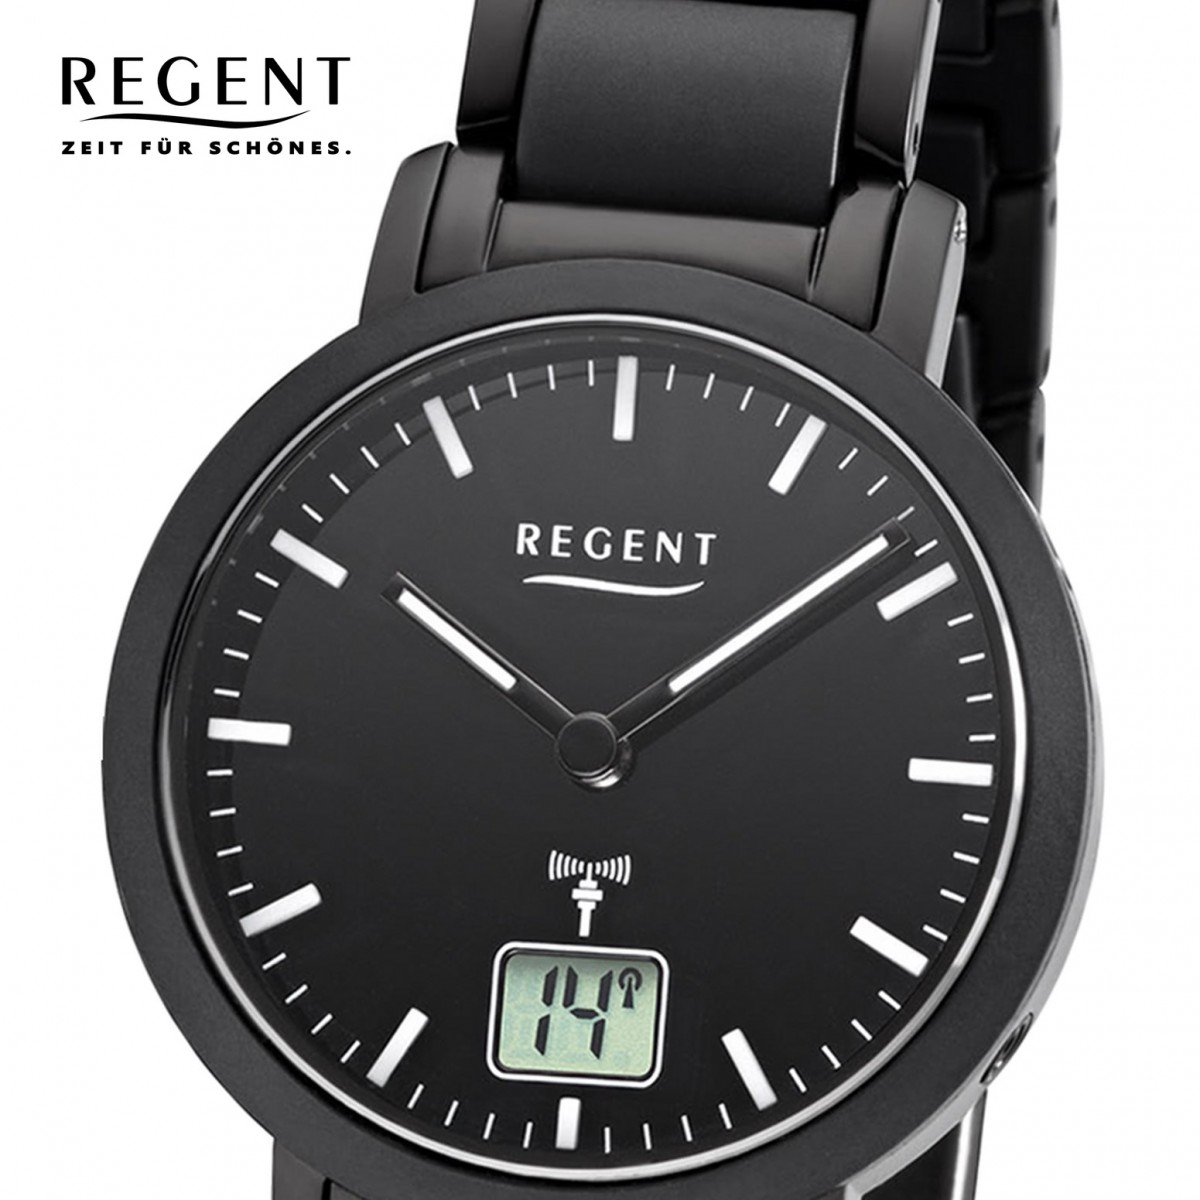 Metall Armbanduhr Damen URFR266 Regent schwarz Analog-Digital Funk-Uhr FR-266